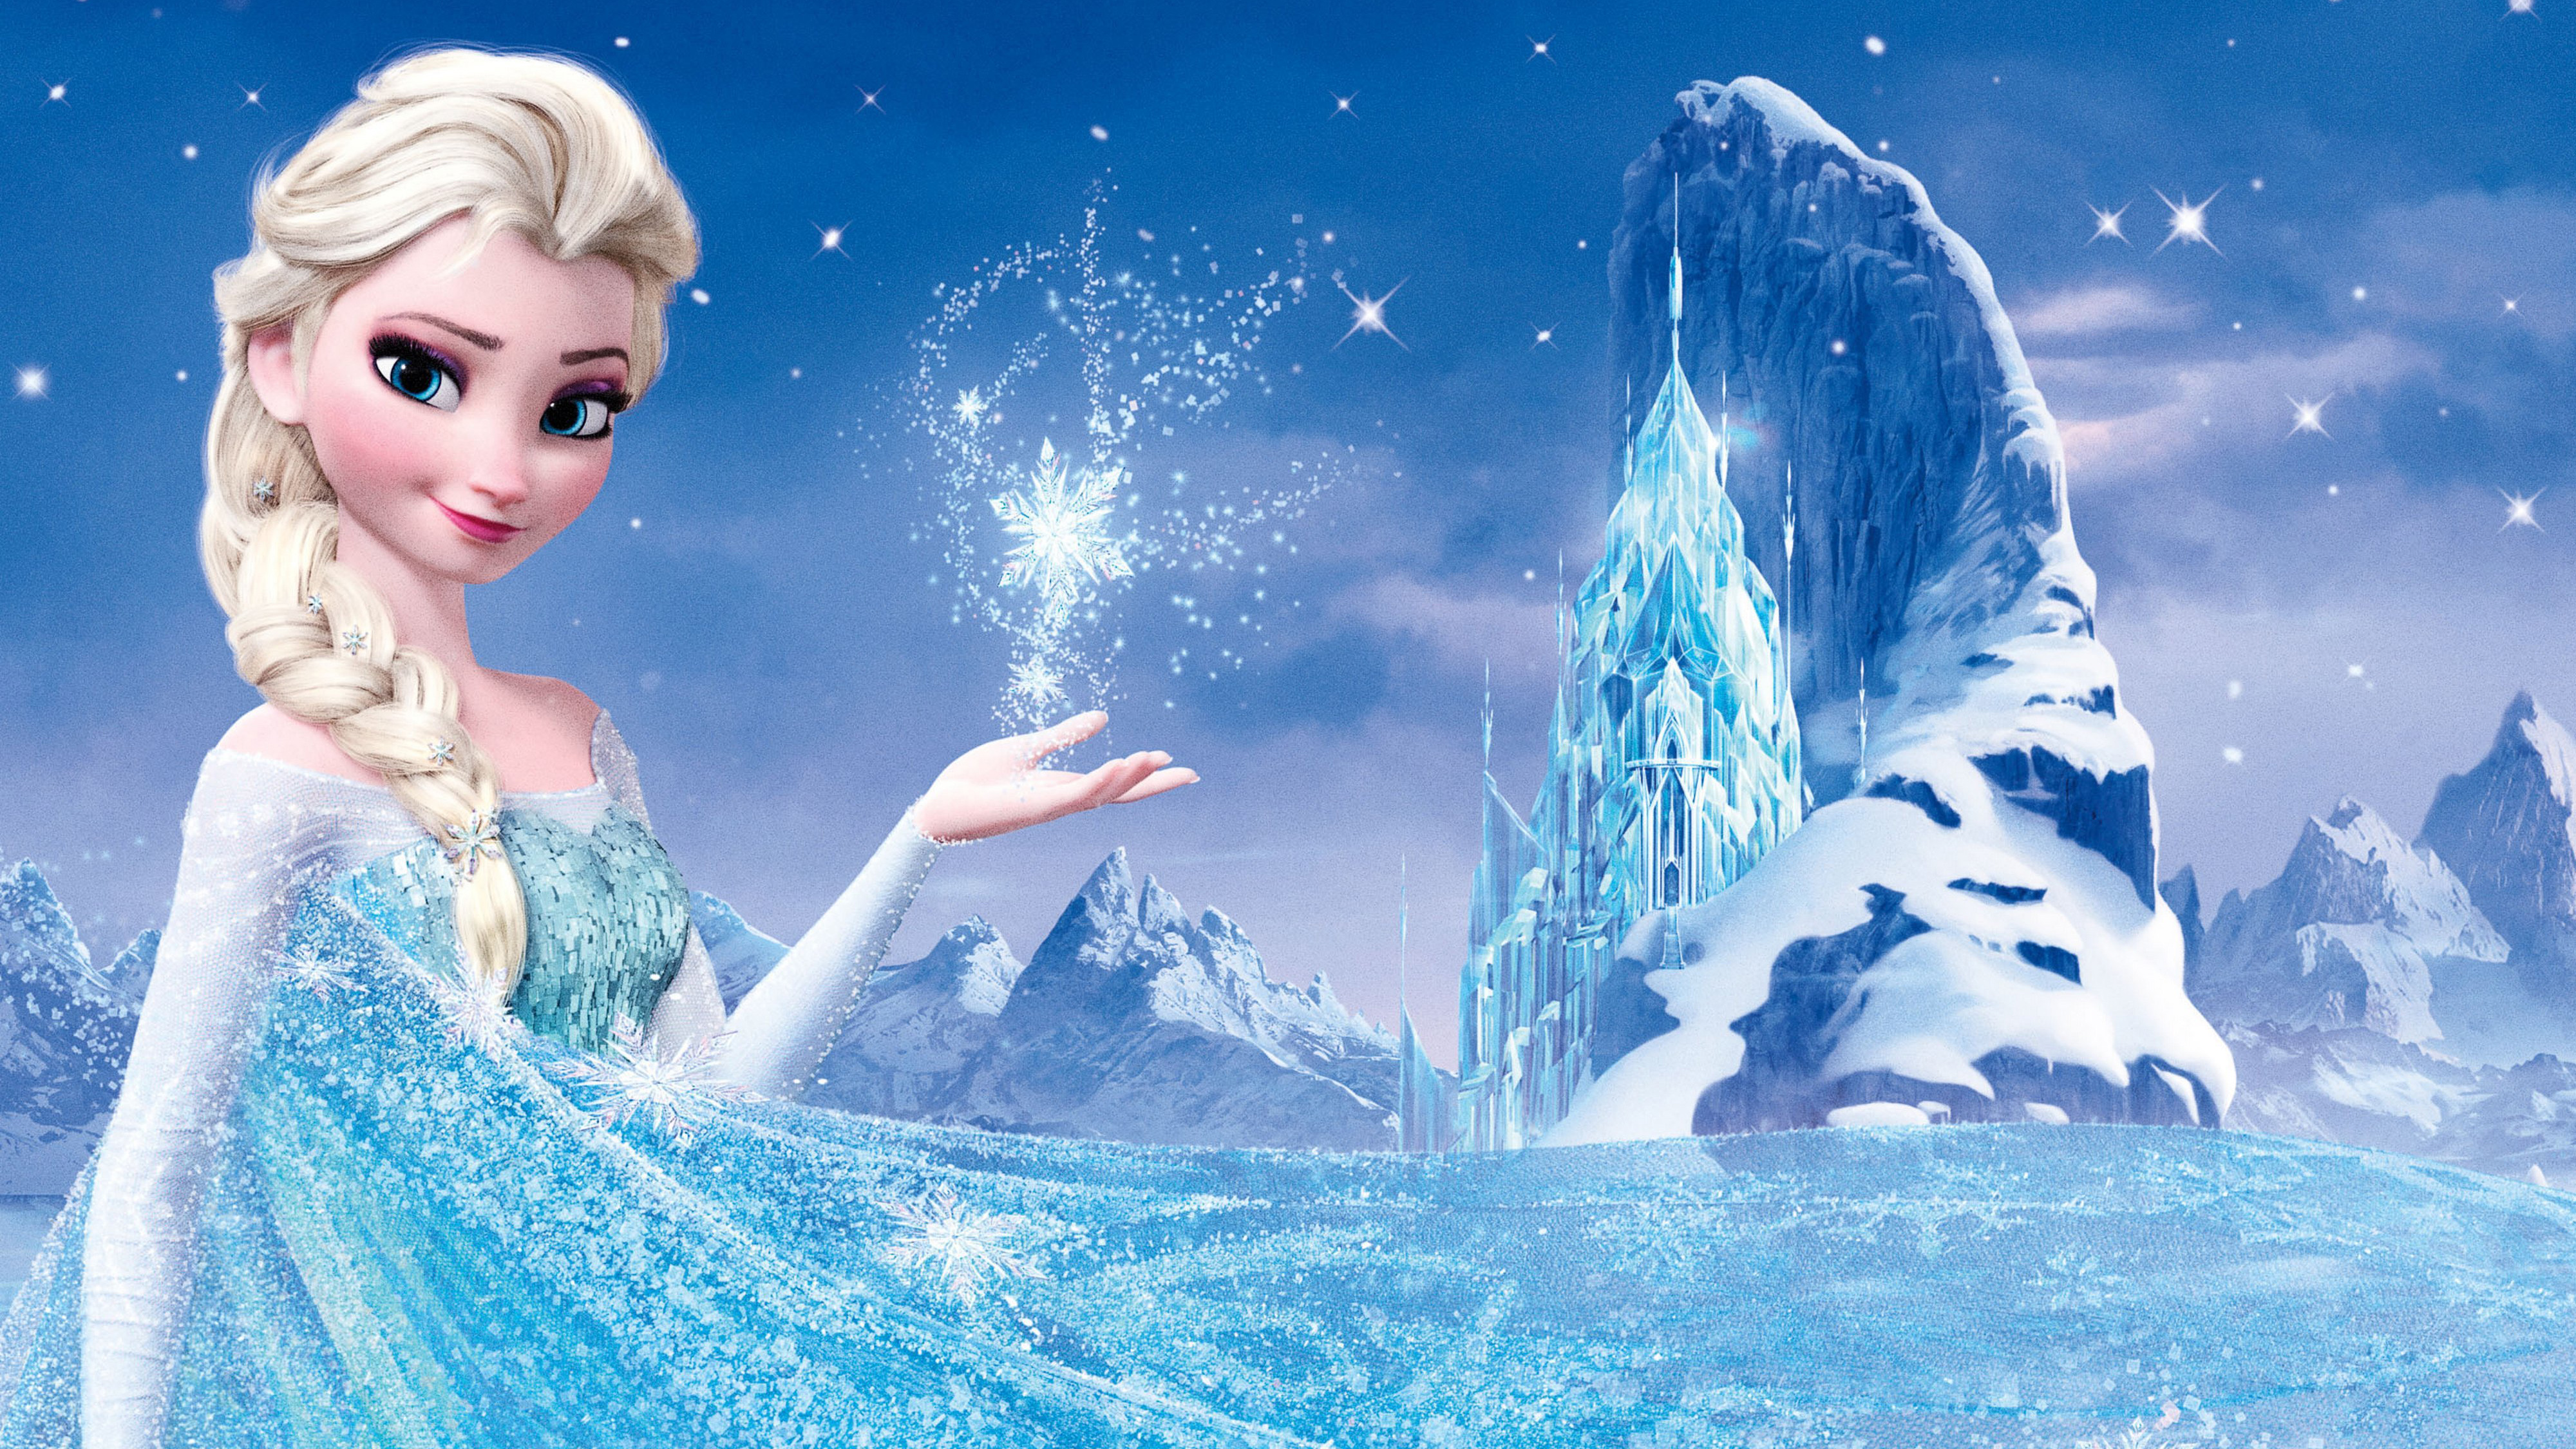 Elsa sarà lesbica nel sequel del film Disney "Frozen"? La decisione della regista Jennifer Lee